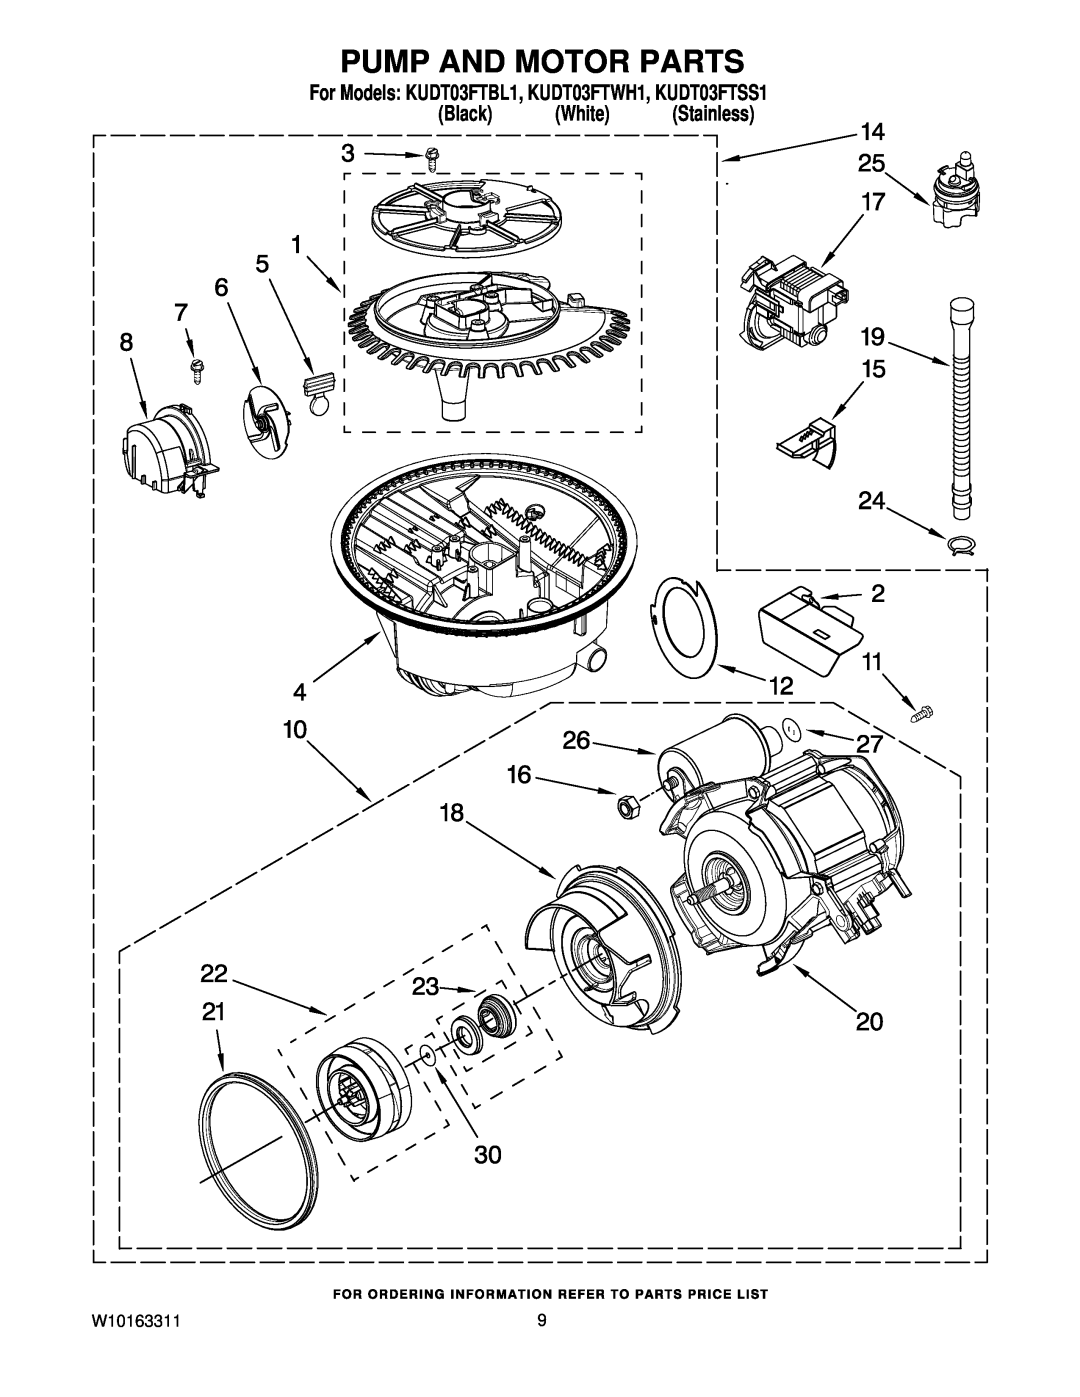 KitchenAid manual Pump And Motor Parts, For Models KUDT03FTBL1, KUDT03FTWH1, KUDT03FTSS1, Black White Stainless 